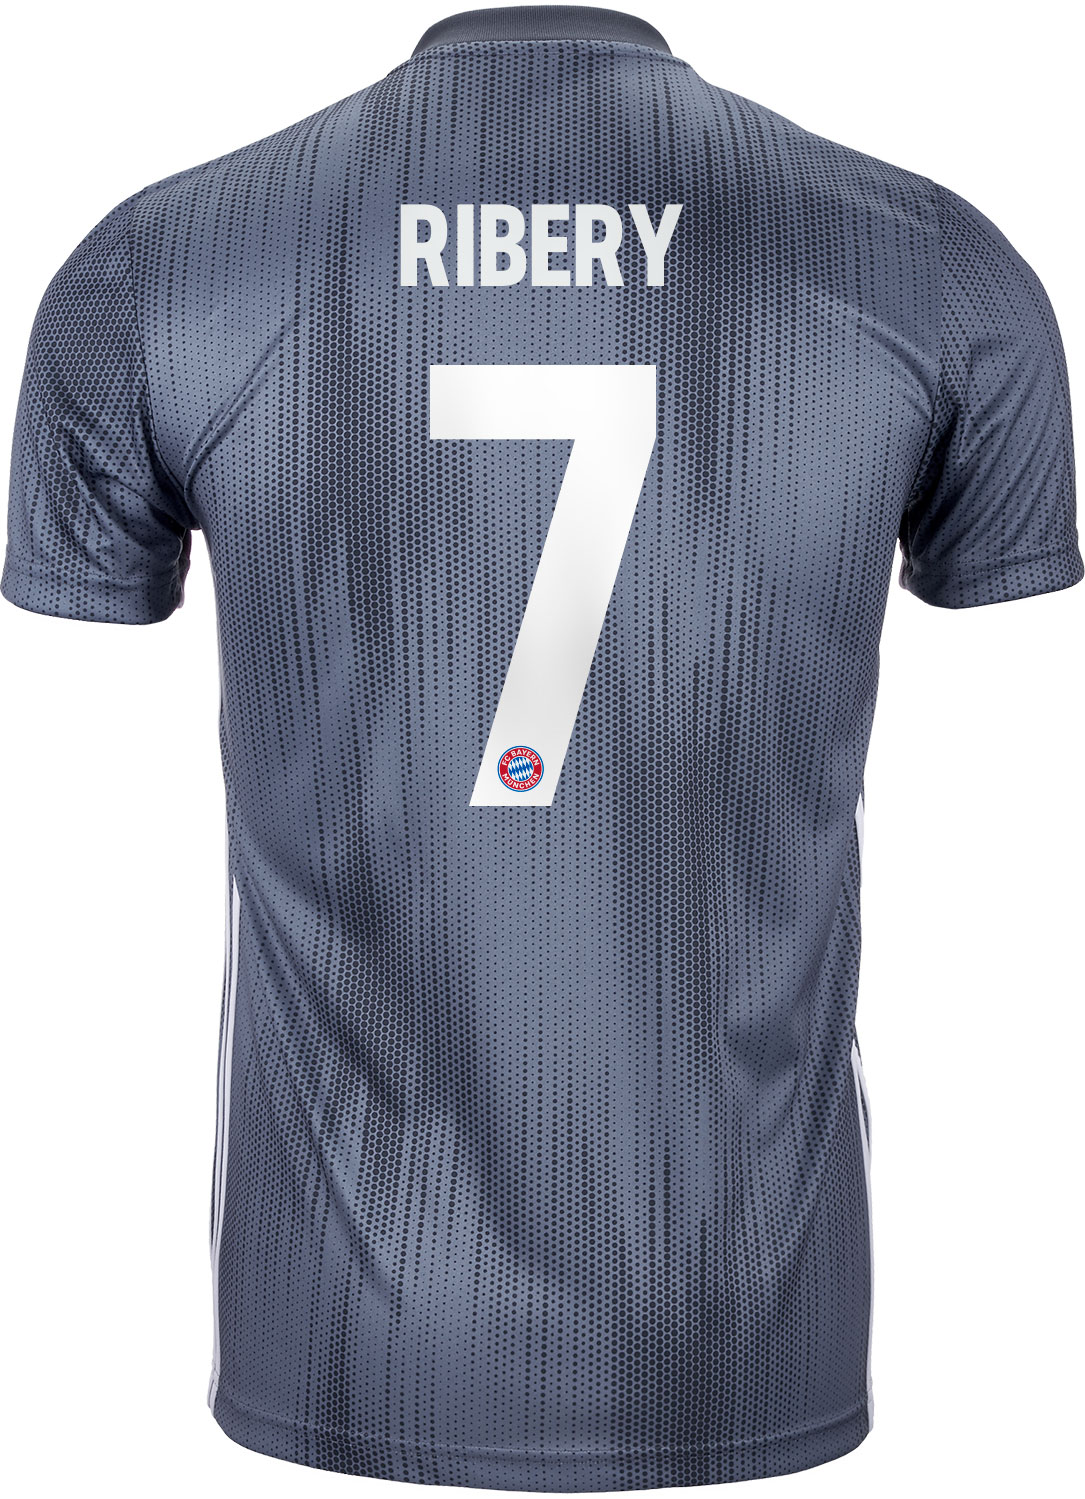 franck ribery jersey number